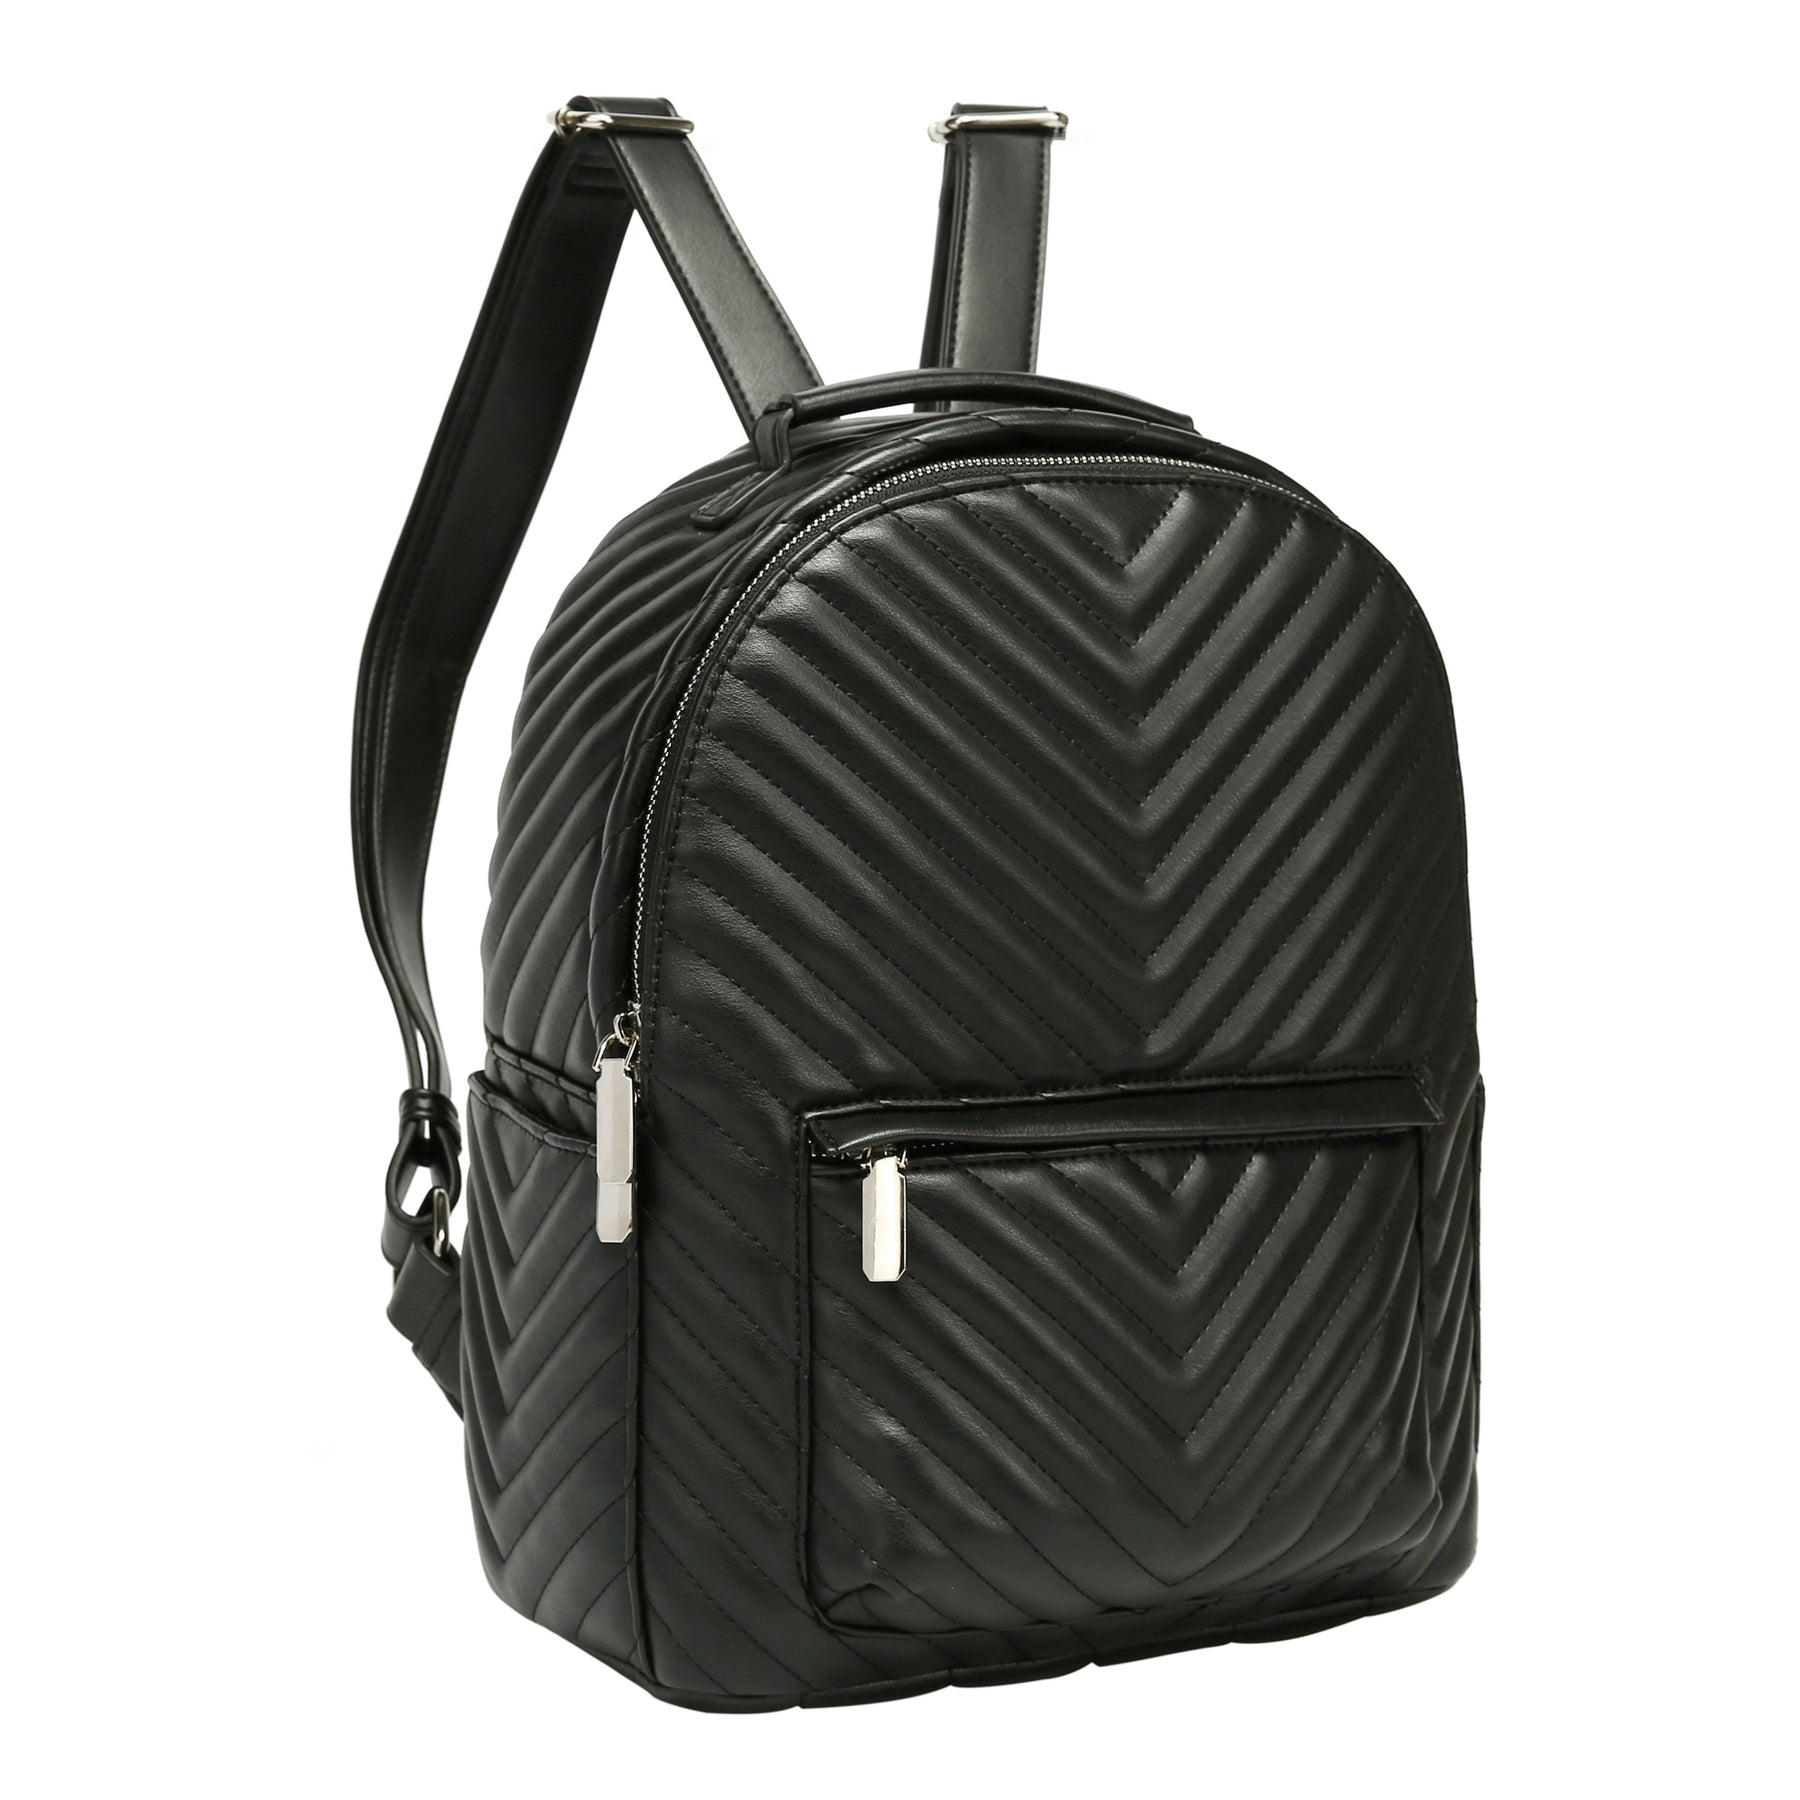 Multi function backpack bag – Daisy Rose bags